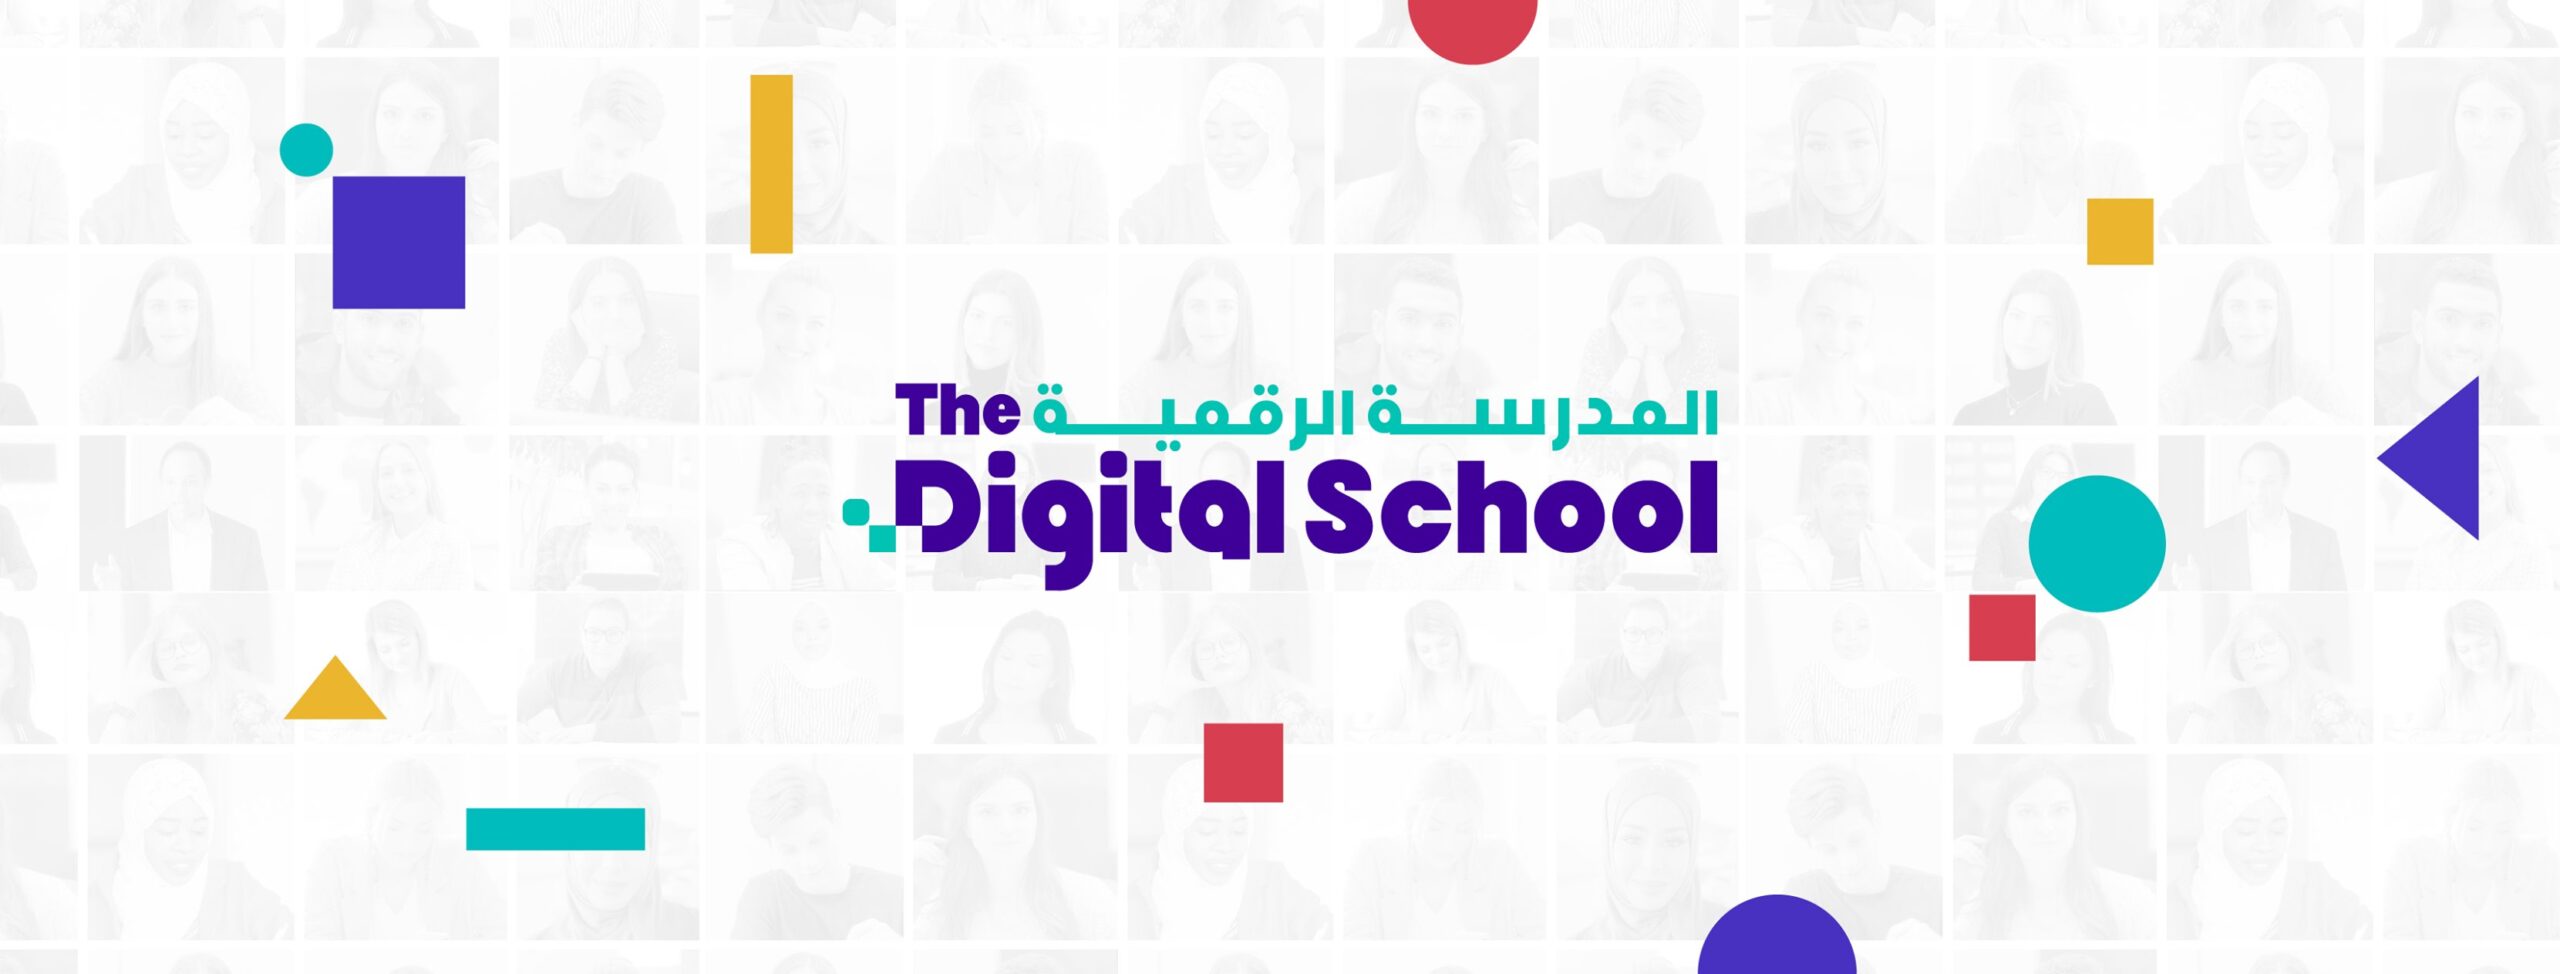 The Digital School Today ..